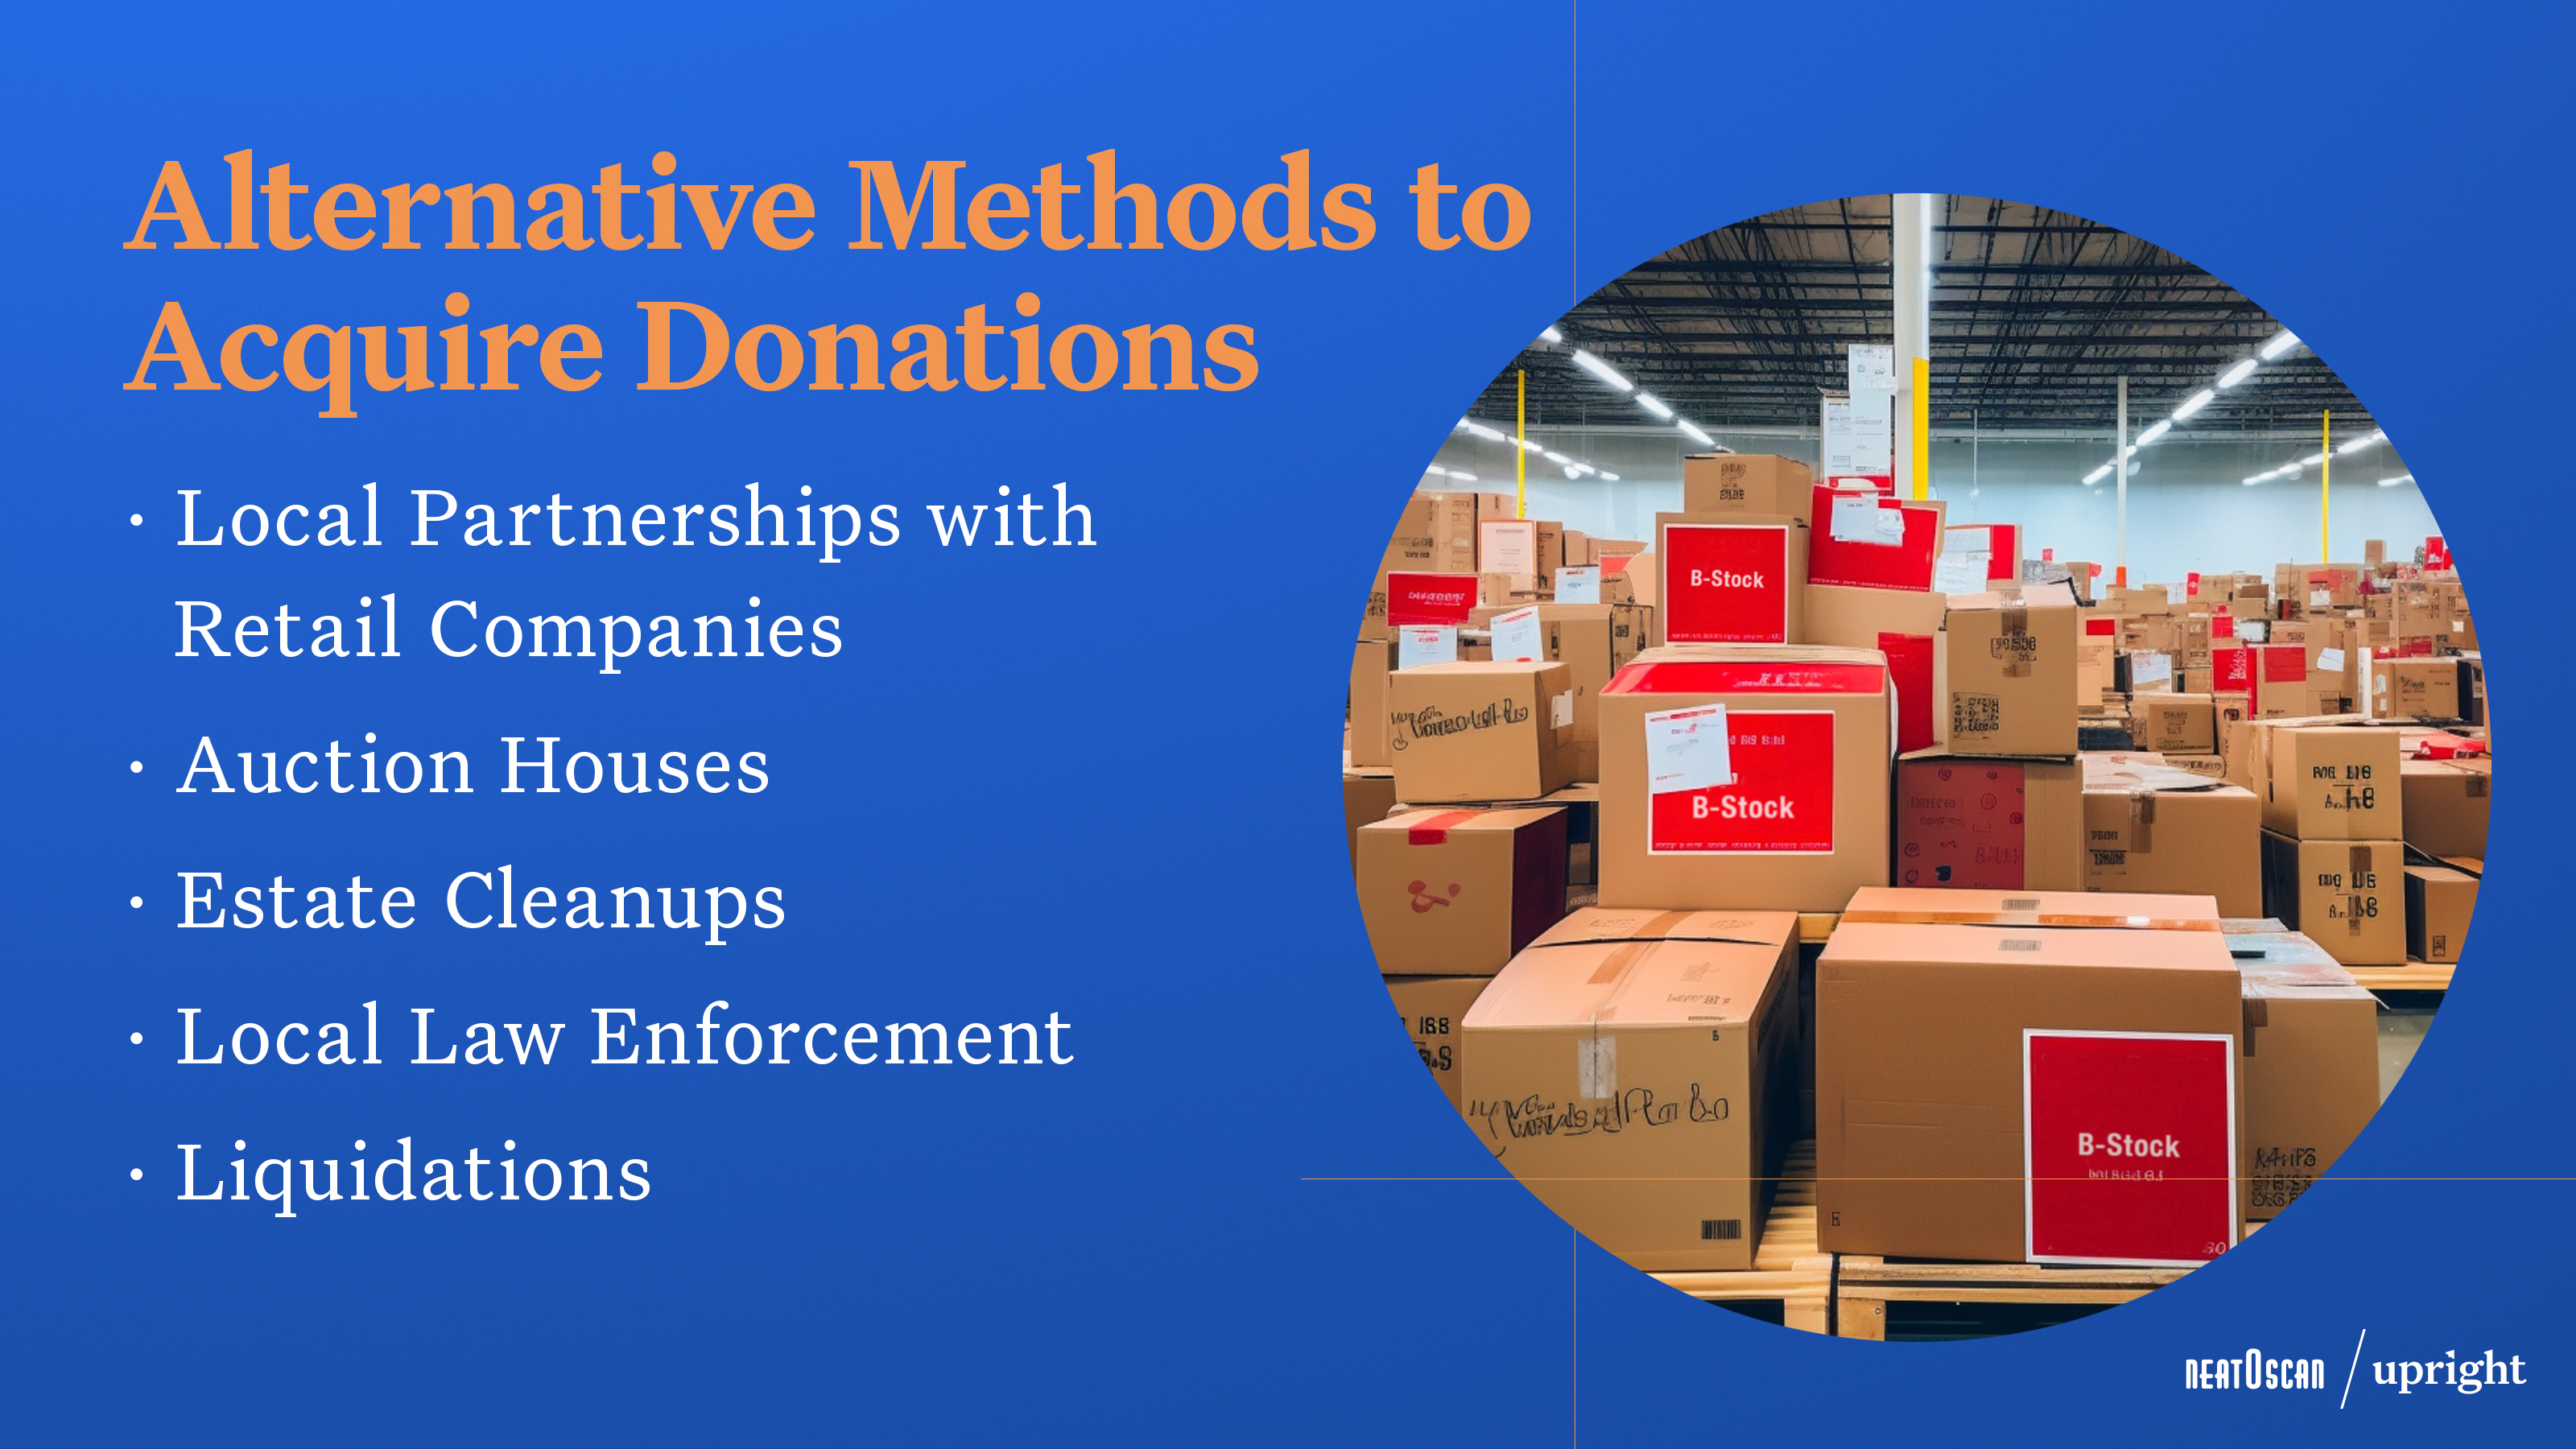 Alternative methods to acquire donations